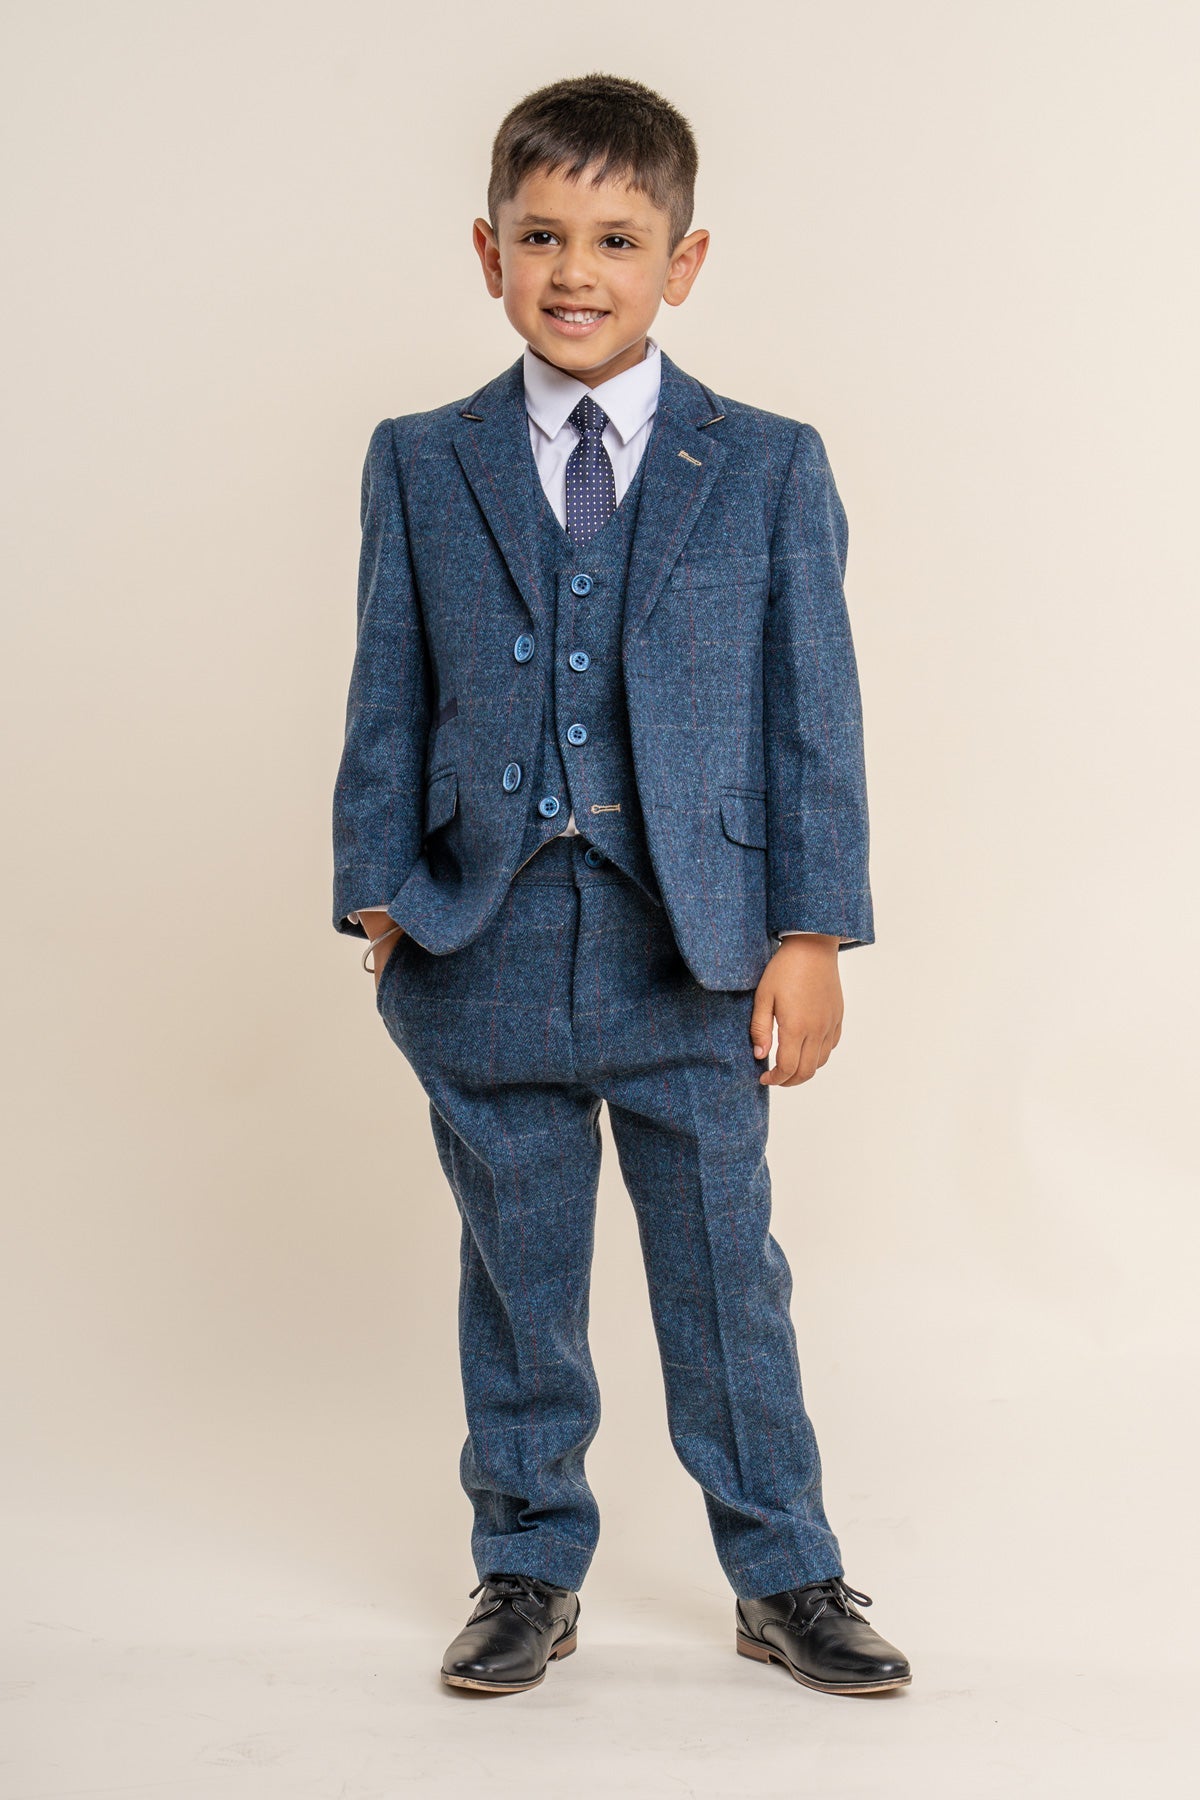 Carnegi Navy Tweed Boys 3 Piece Wedding Suit - Childrenswear - 1 - Swagger & Swoon